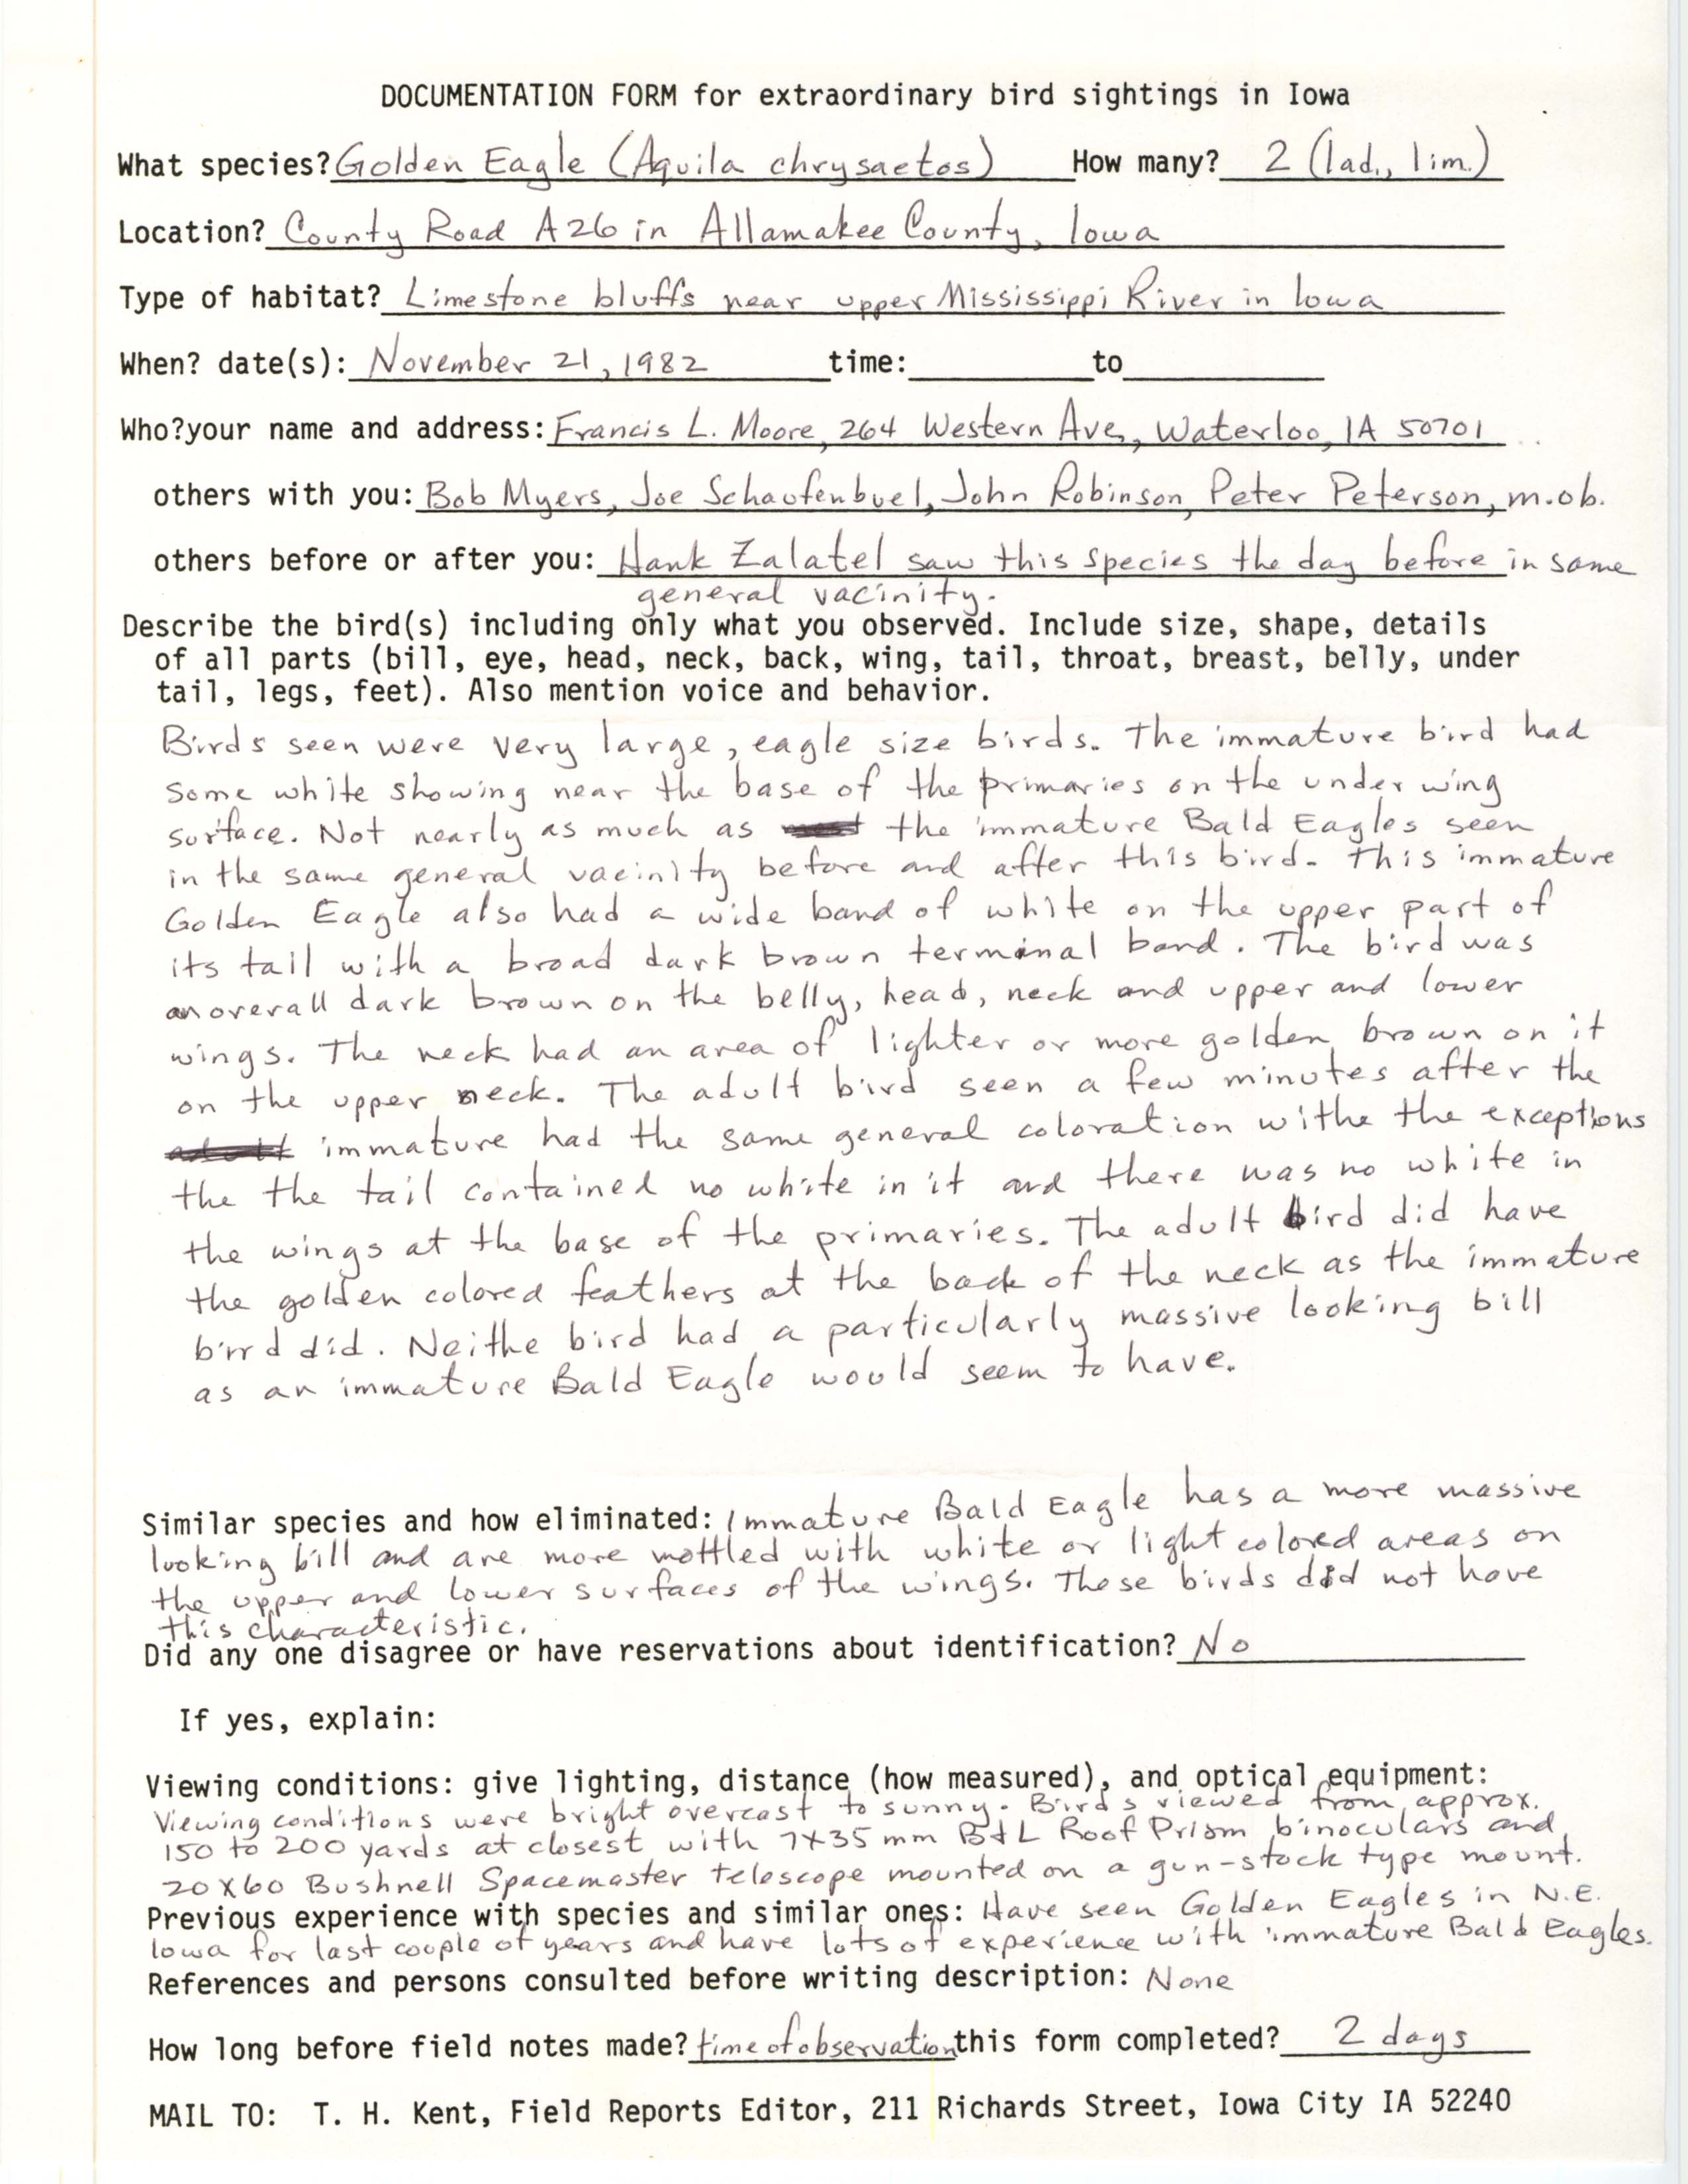 Rare bird documentation form for Golden Eagle at Allamakee County, 1982